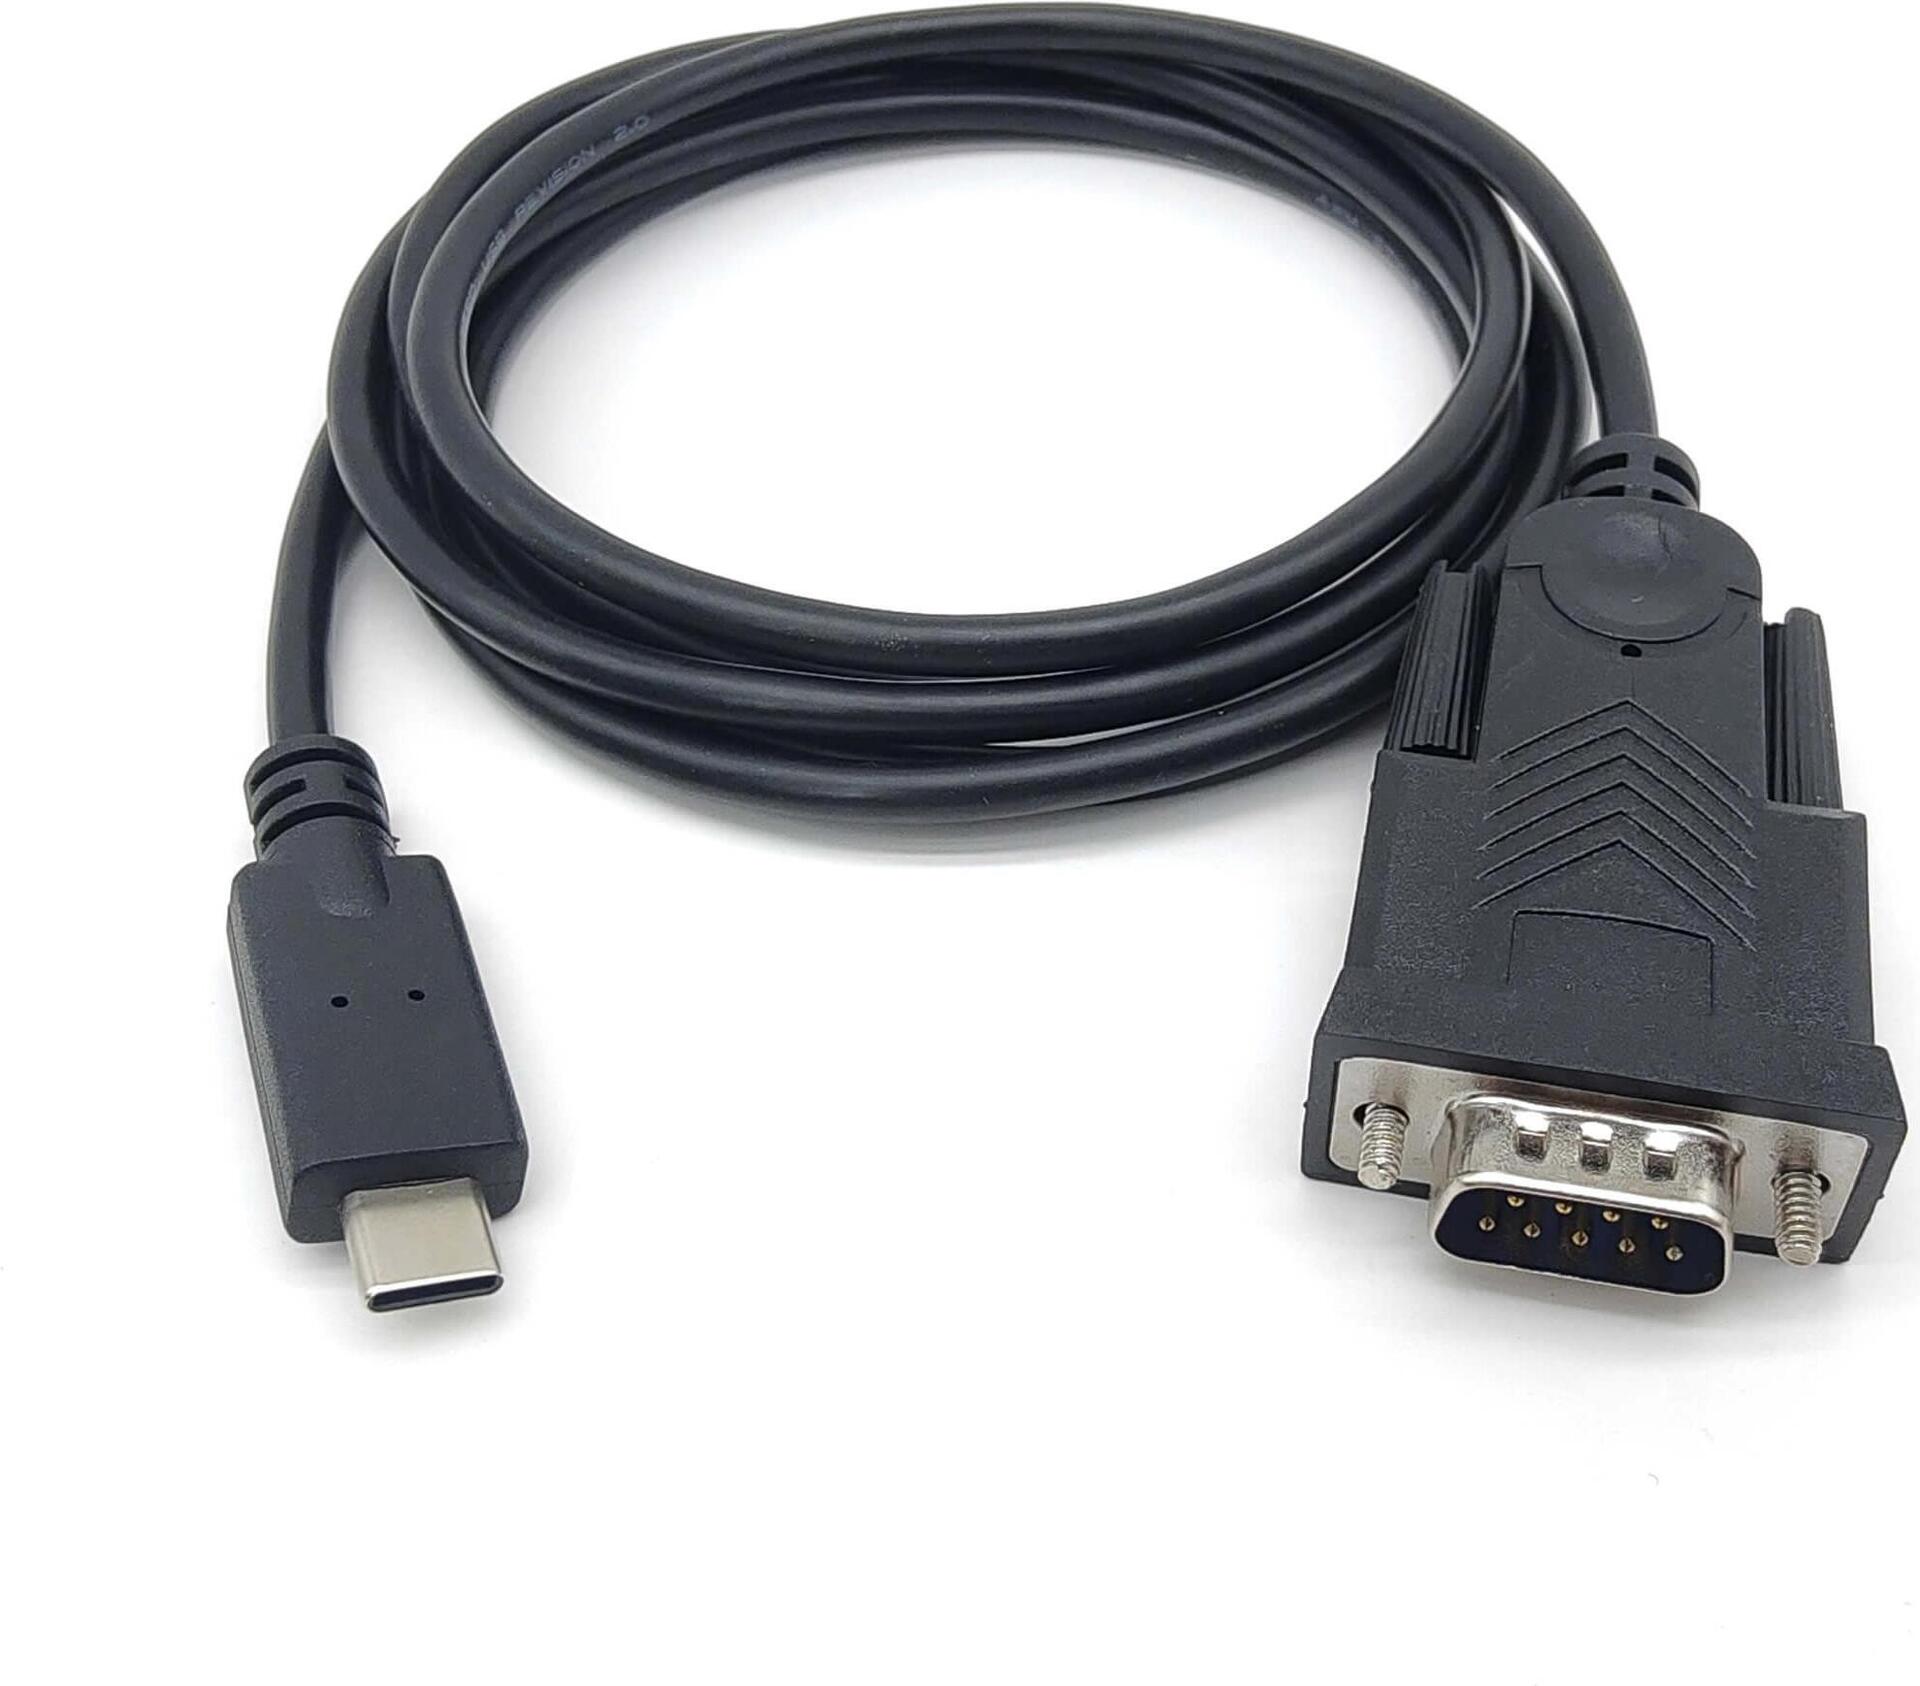 Equip - Kabel USB / seriell - 24 pin USB-C (M) zu DB-9 (M) - 1,5m - supports RS-232 serial interface - Schwarz (133392)